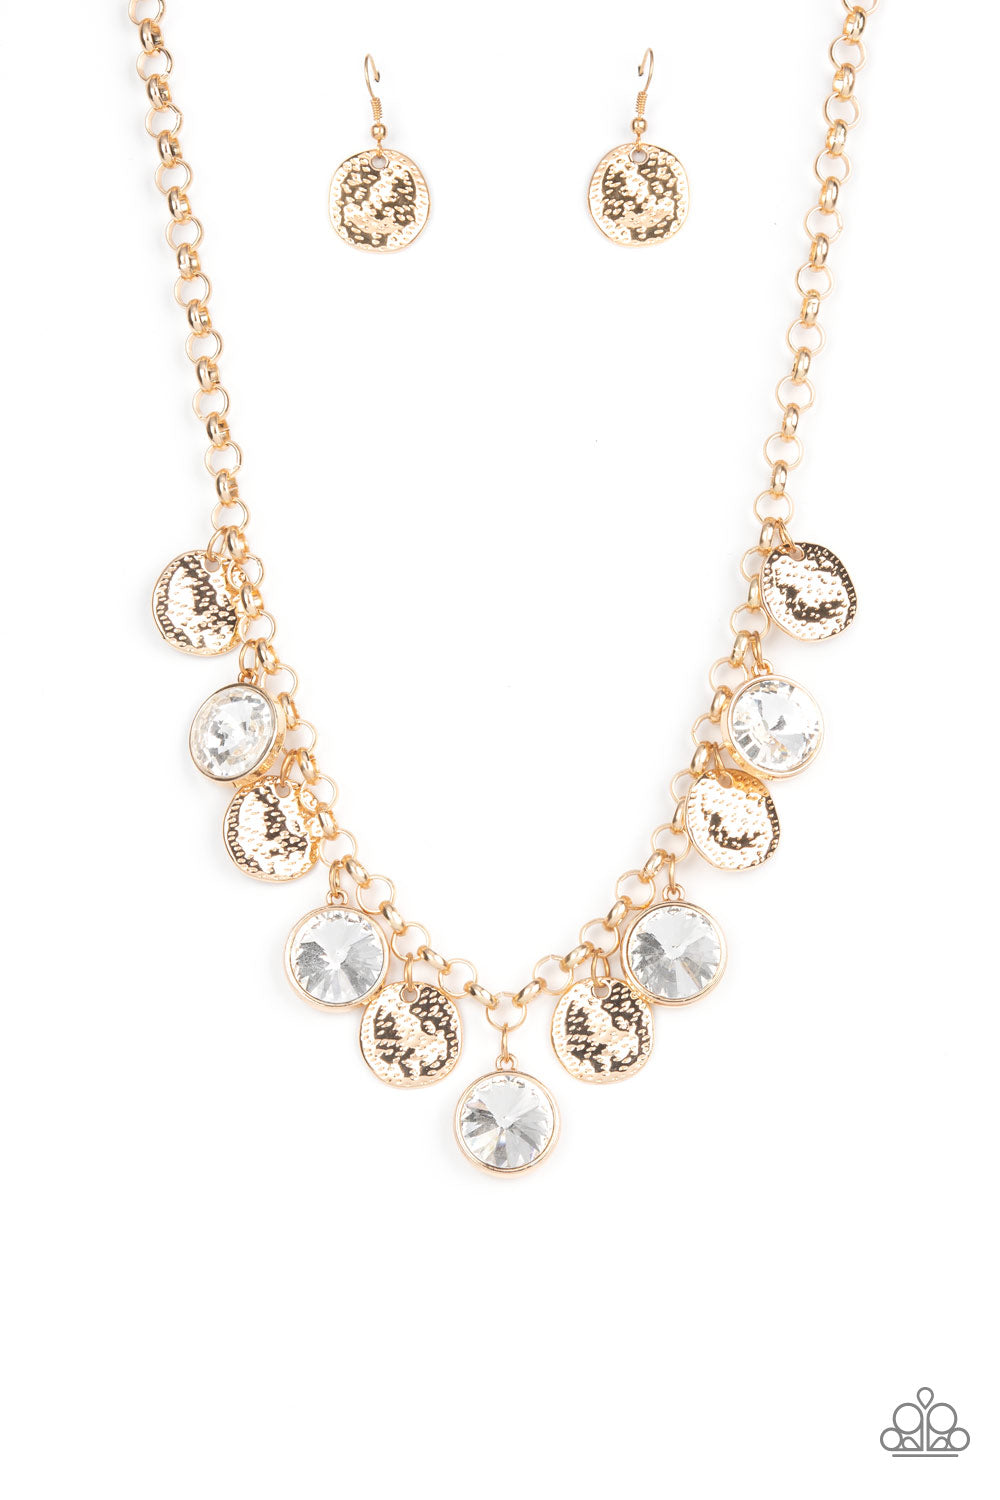 Spot On Sparkle Gold Paparazzi Necklace Cashmere Pink Jewels